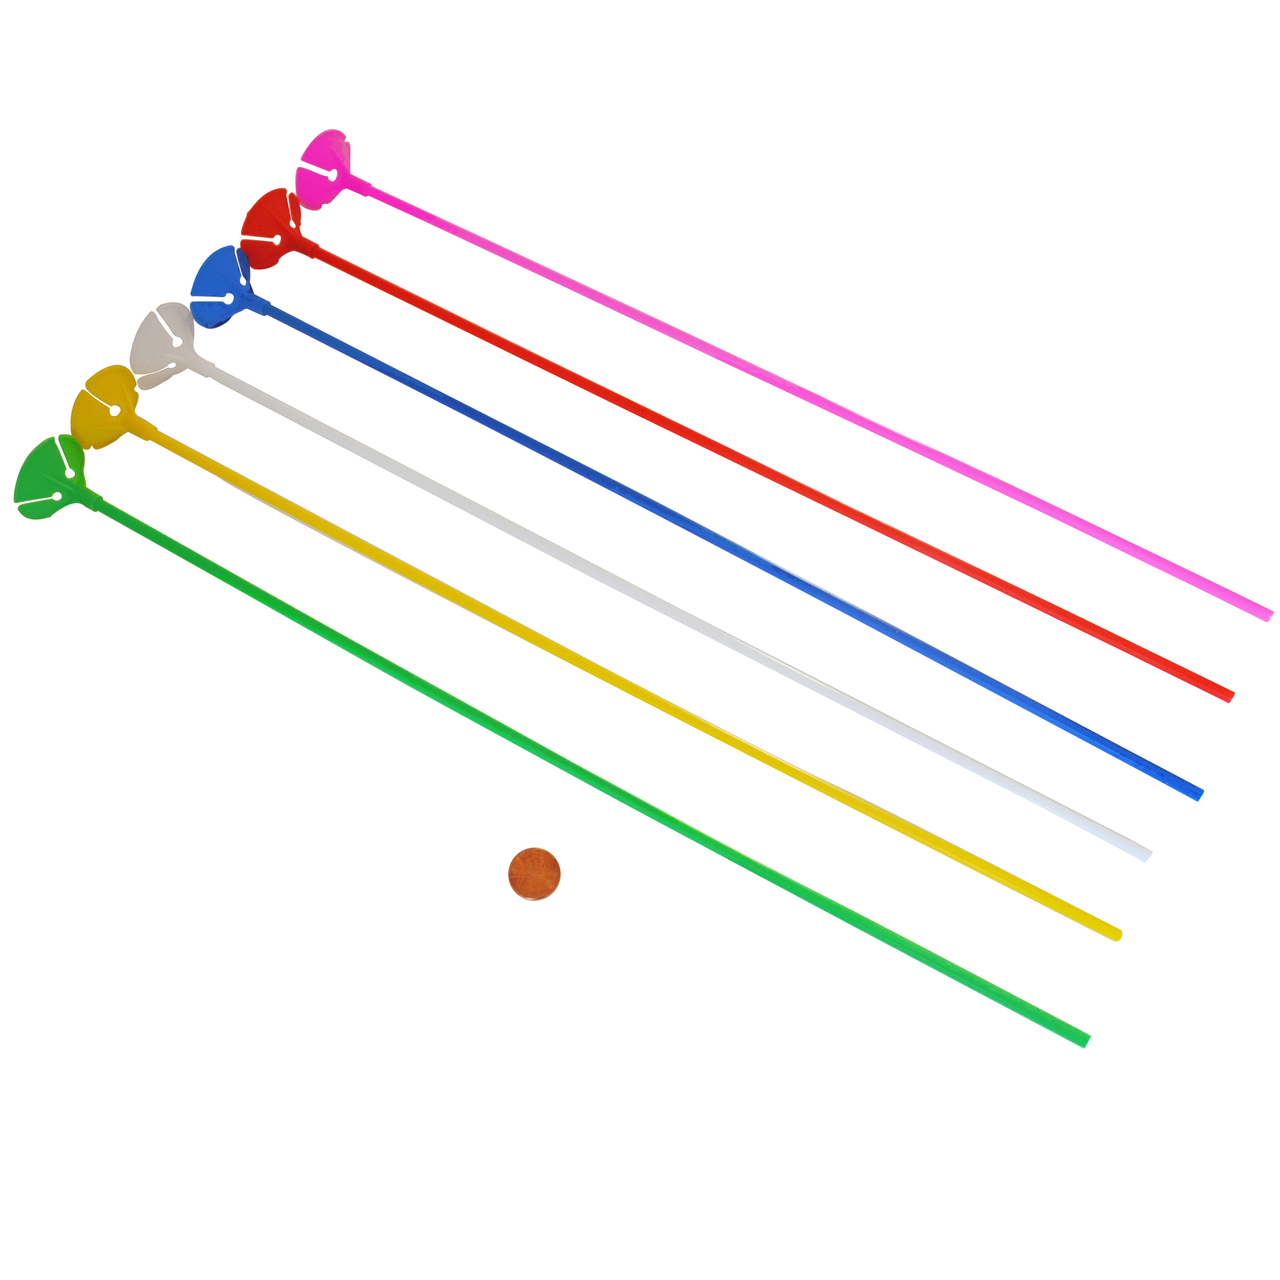 Colorful Paper Balloon Sticks - Homestraw